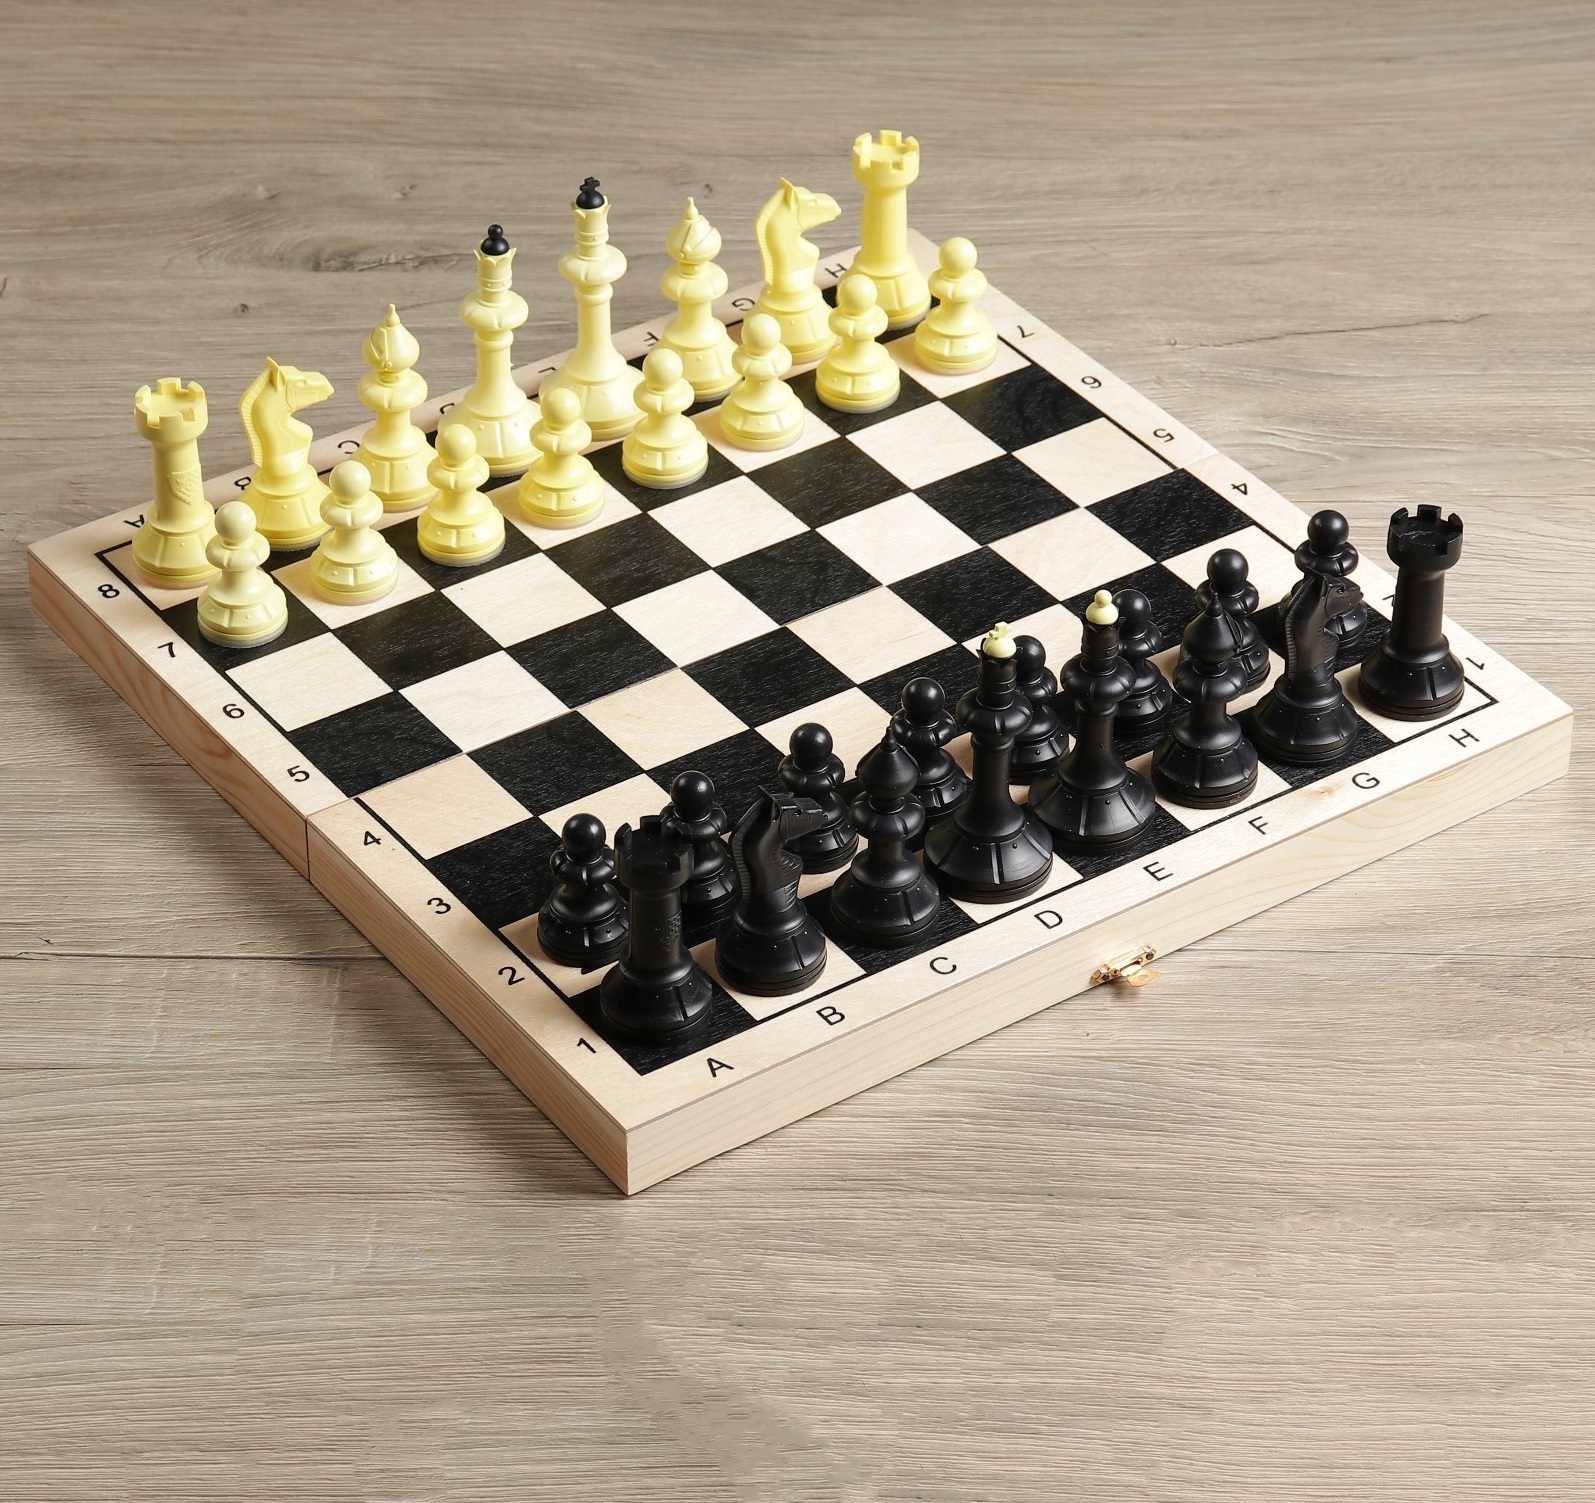 Создание шахматной доски. Шахматы гроссмейстерские 40х40 см. Lebaijia шахматы c08. Игра 3 в 1 (нарды, шахматы (пластик), шашки) малая классика (086-12). Игра 3в1 (шахматы, шашки, нарды), доска дерево+пластик (40/40 см).